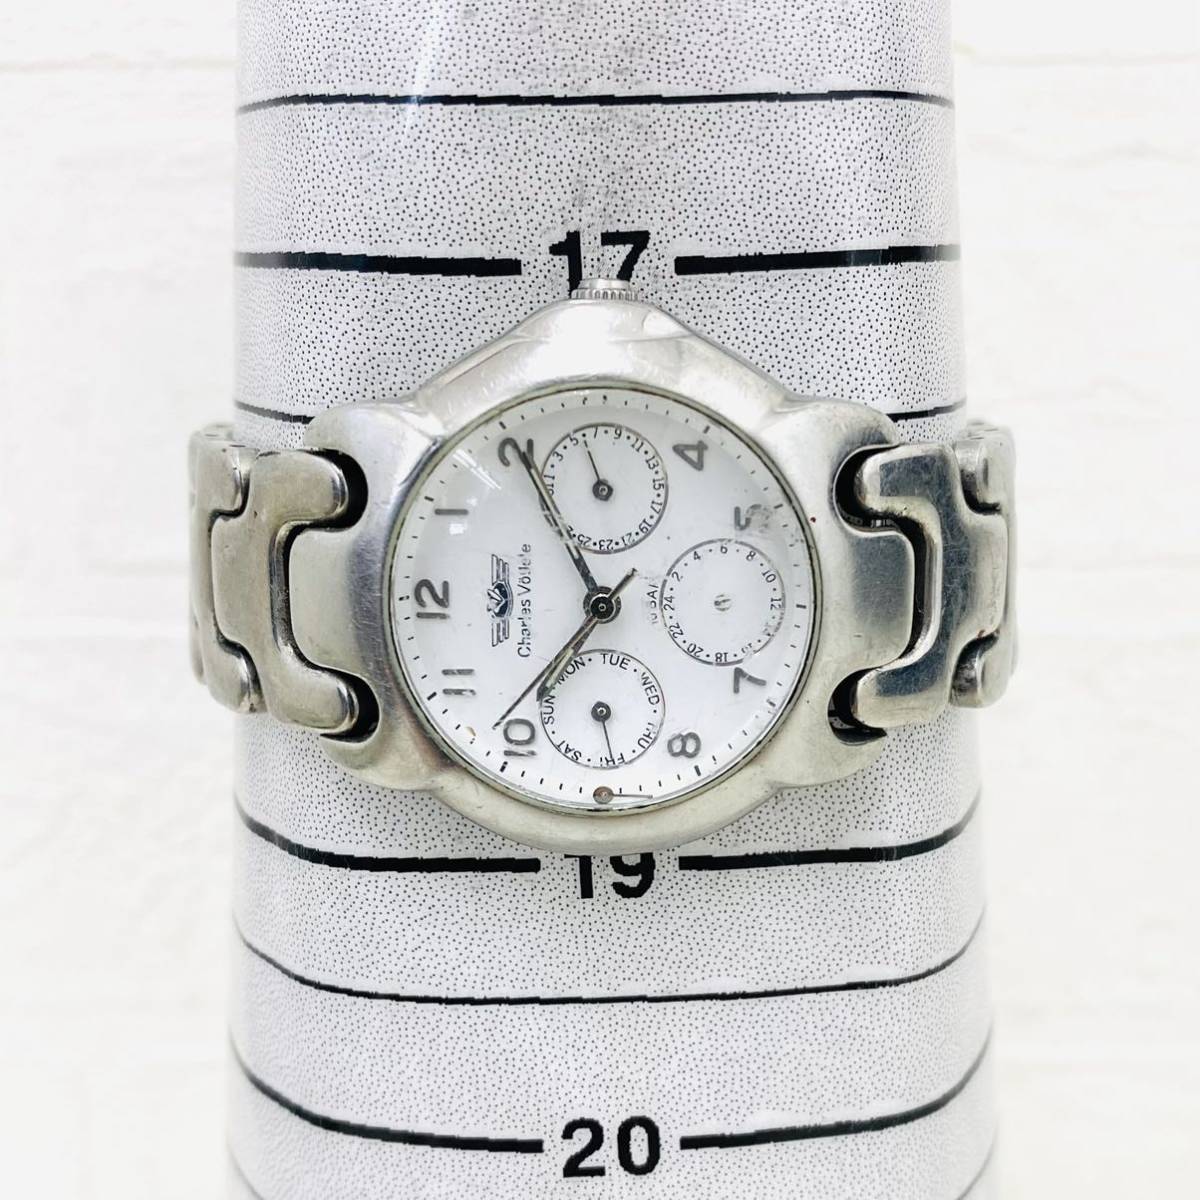 595 Charles Vogele シャルルホーゲル メンズ腕時計 腕時計 時計 クオーツ クォーツ クロノグラフ 文字盤白 10BAR CV-7714 シルバー NK_画像5